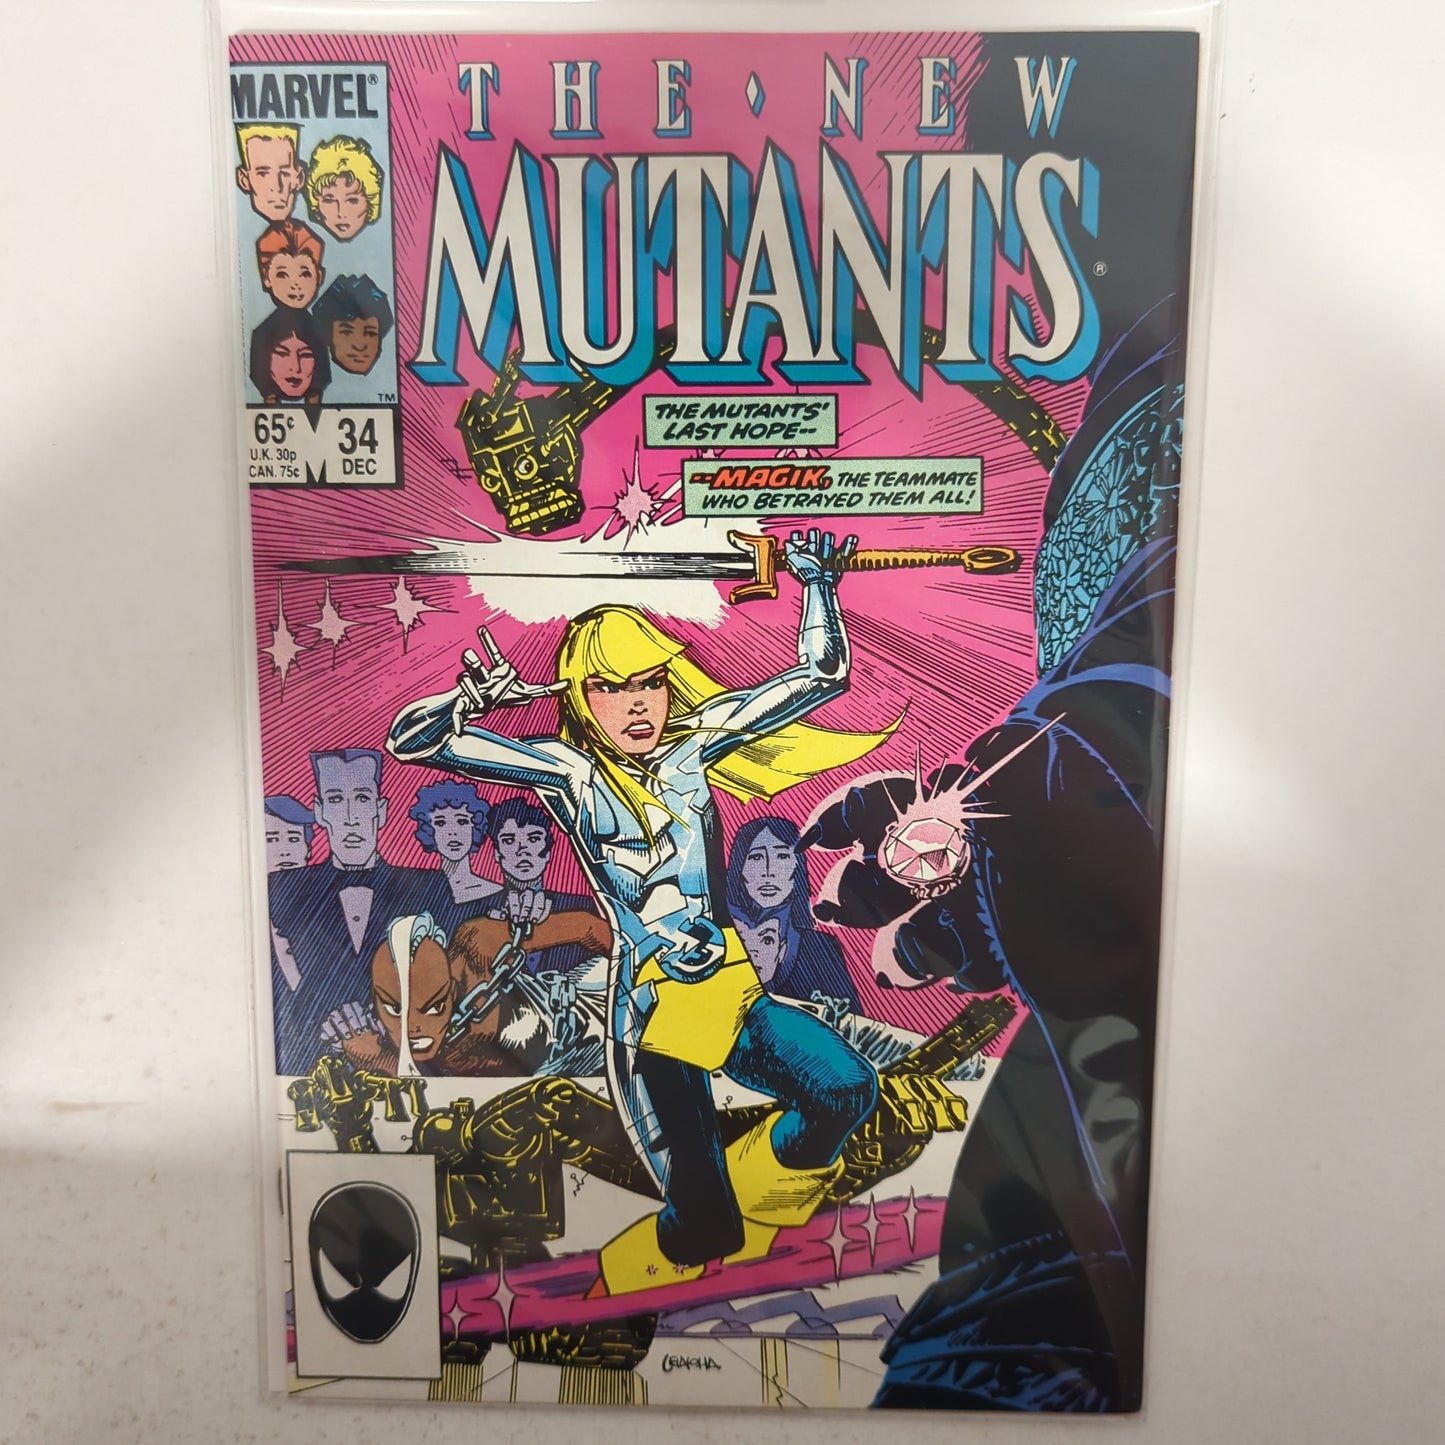 The New Mutants #34